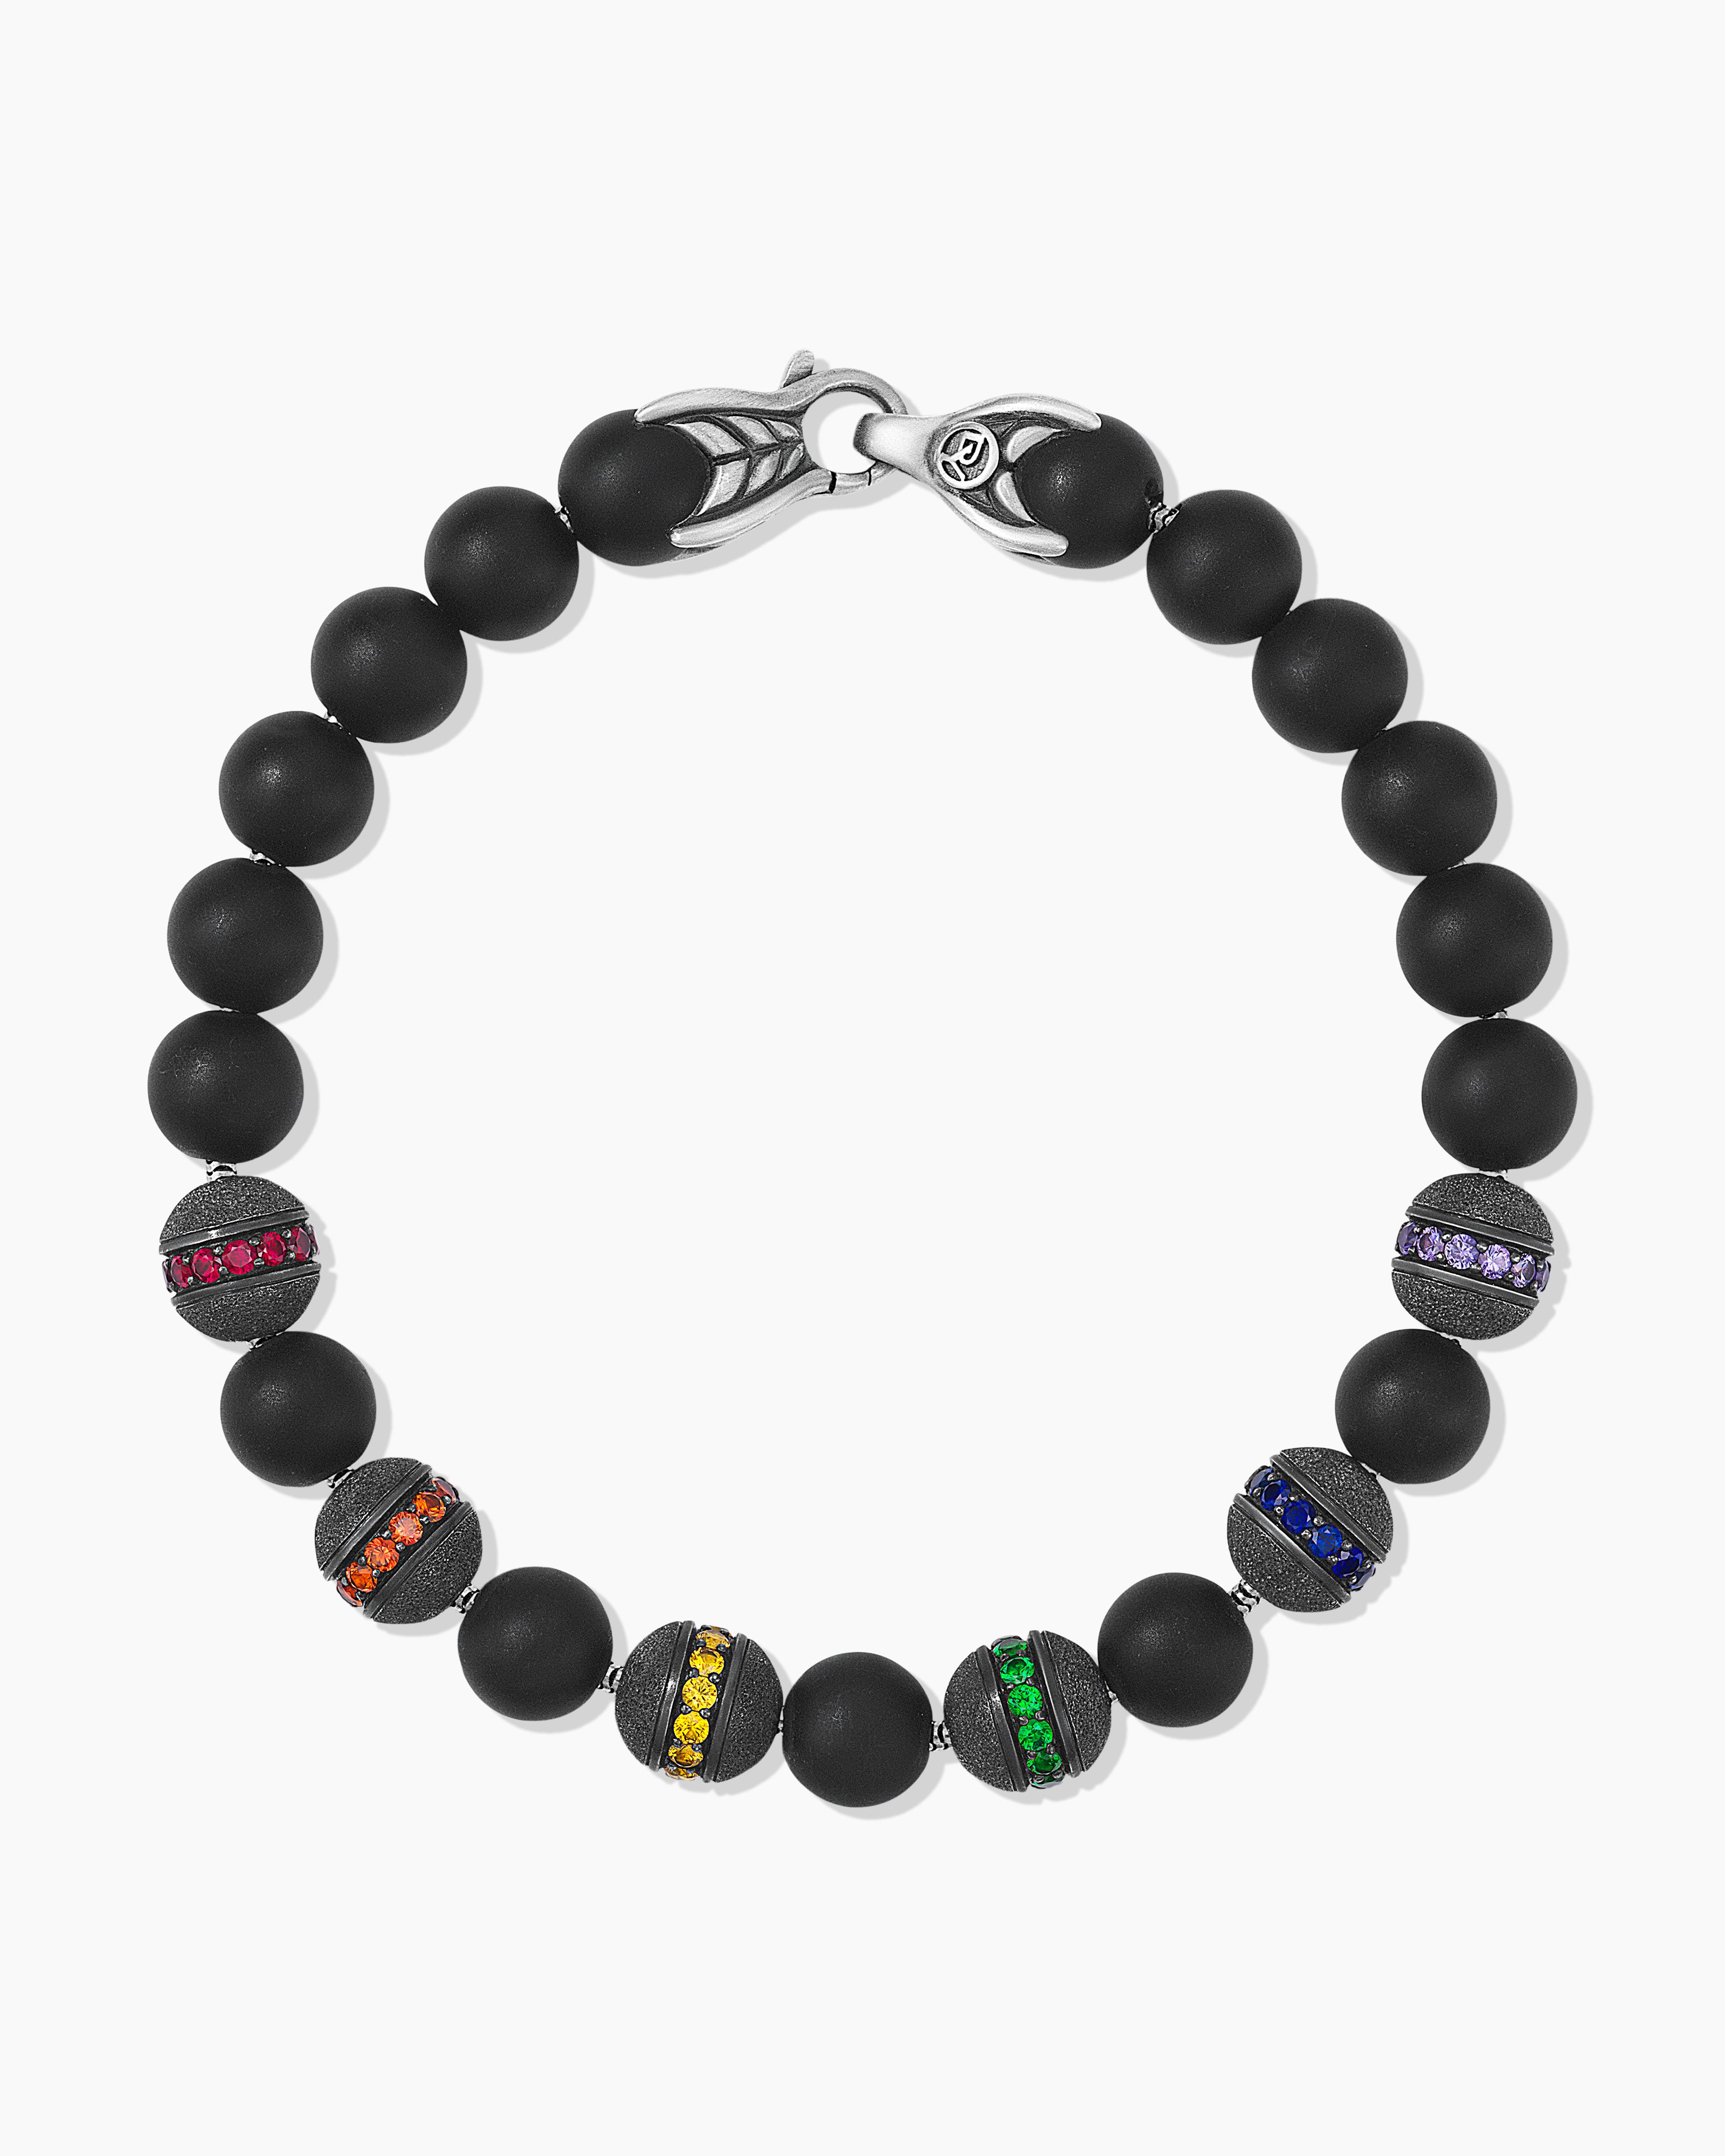 8mm Rainbow Bracelet Sterling Silver, David | Beads Spiritual Yurman in